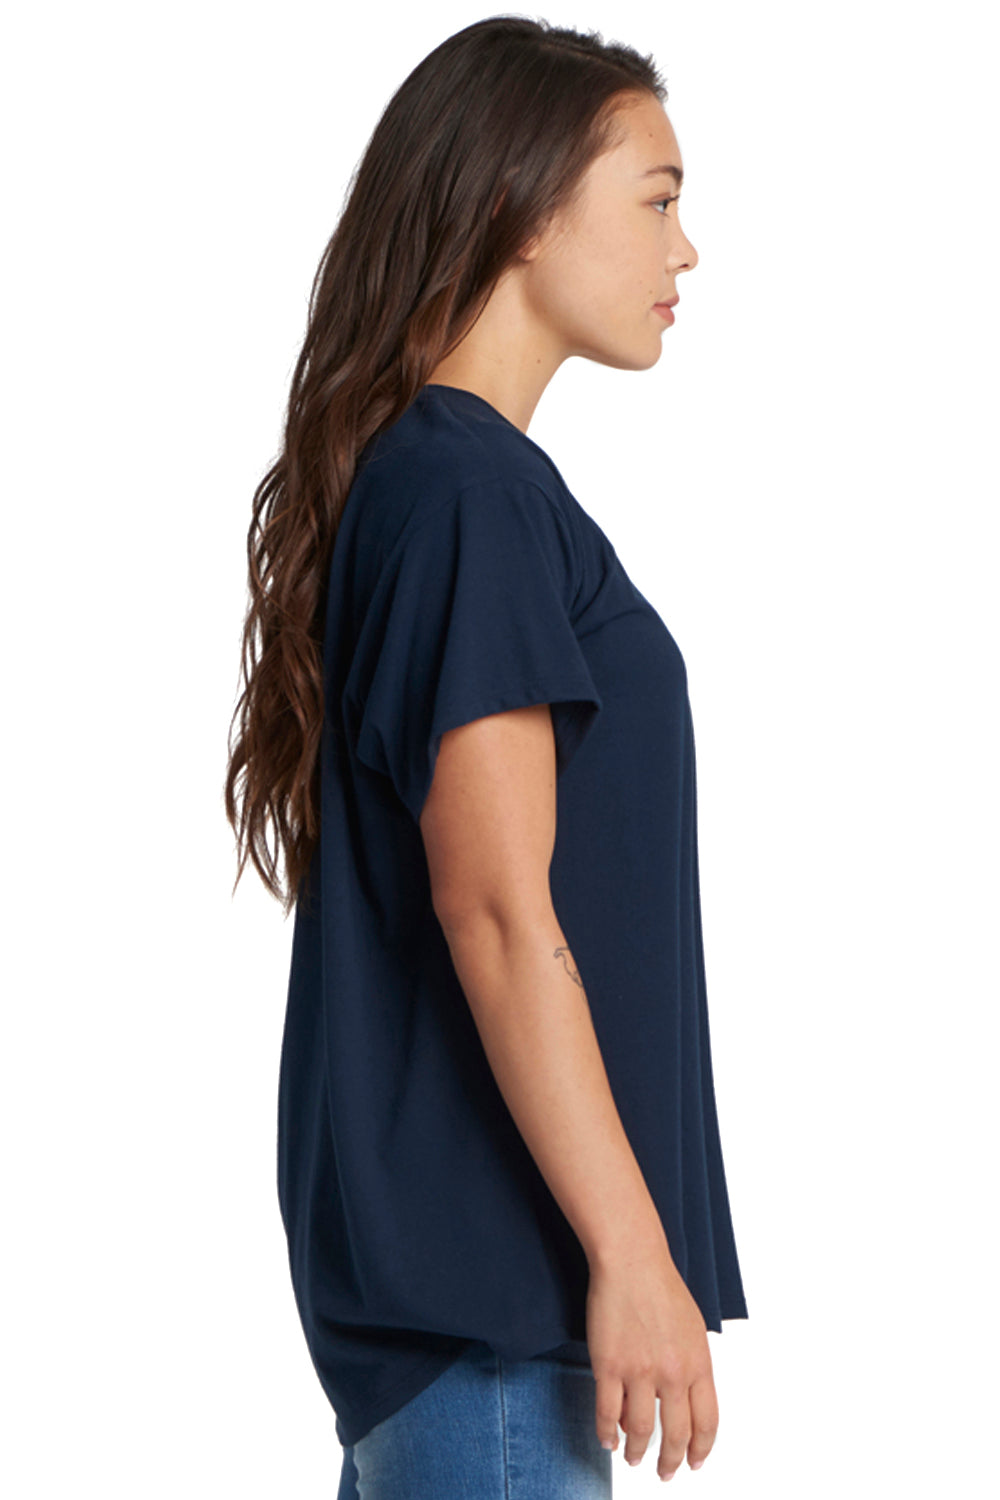 Next Level N1530 Womens Ideal Flow Short Sleeve Crewneck T-Shirt Navy Blue Side